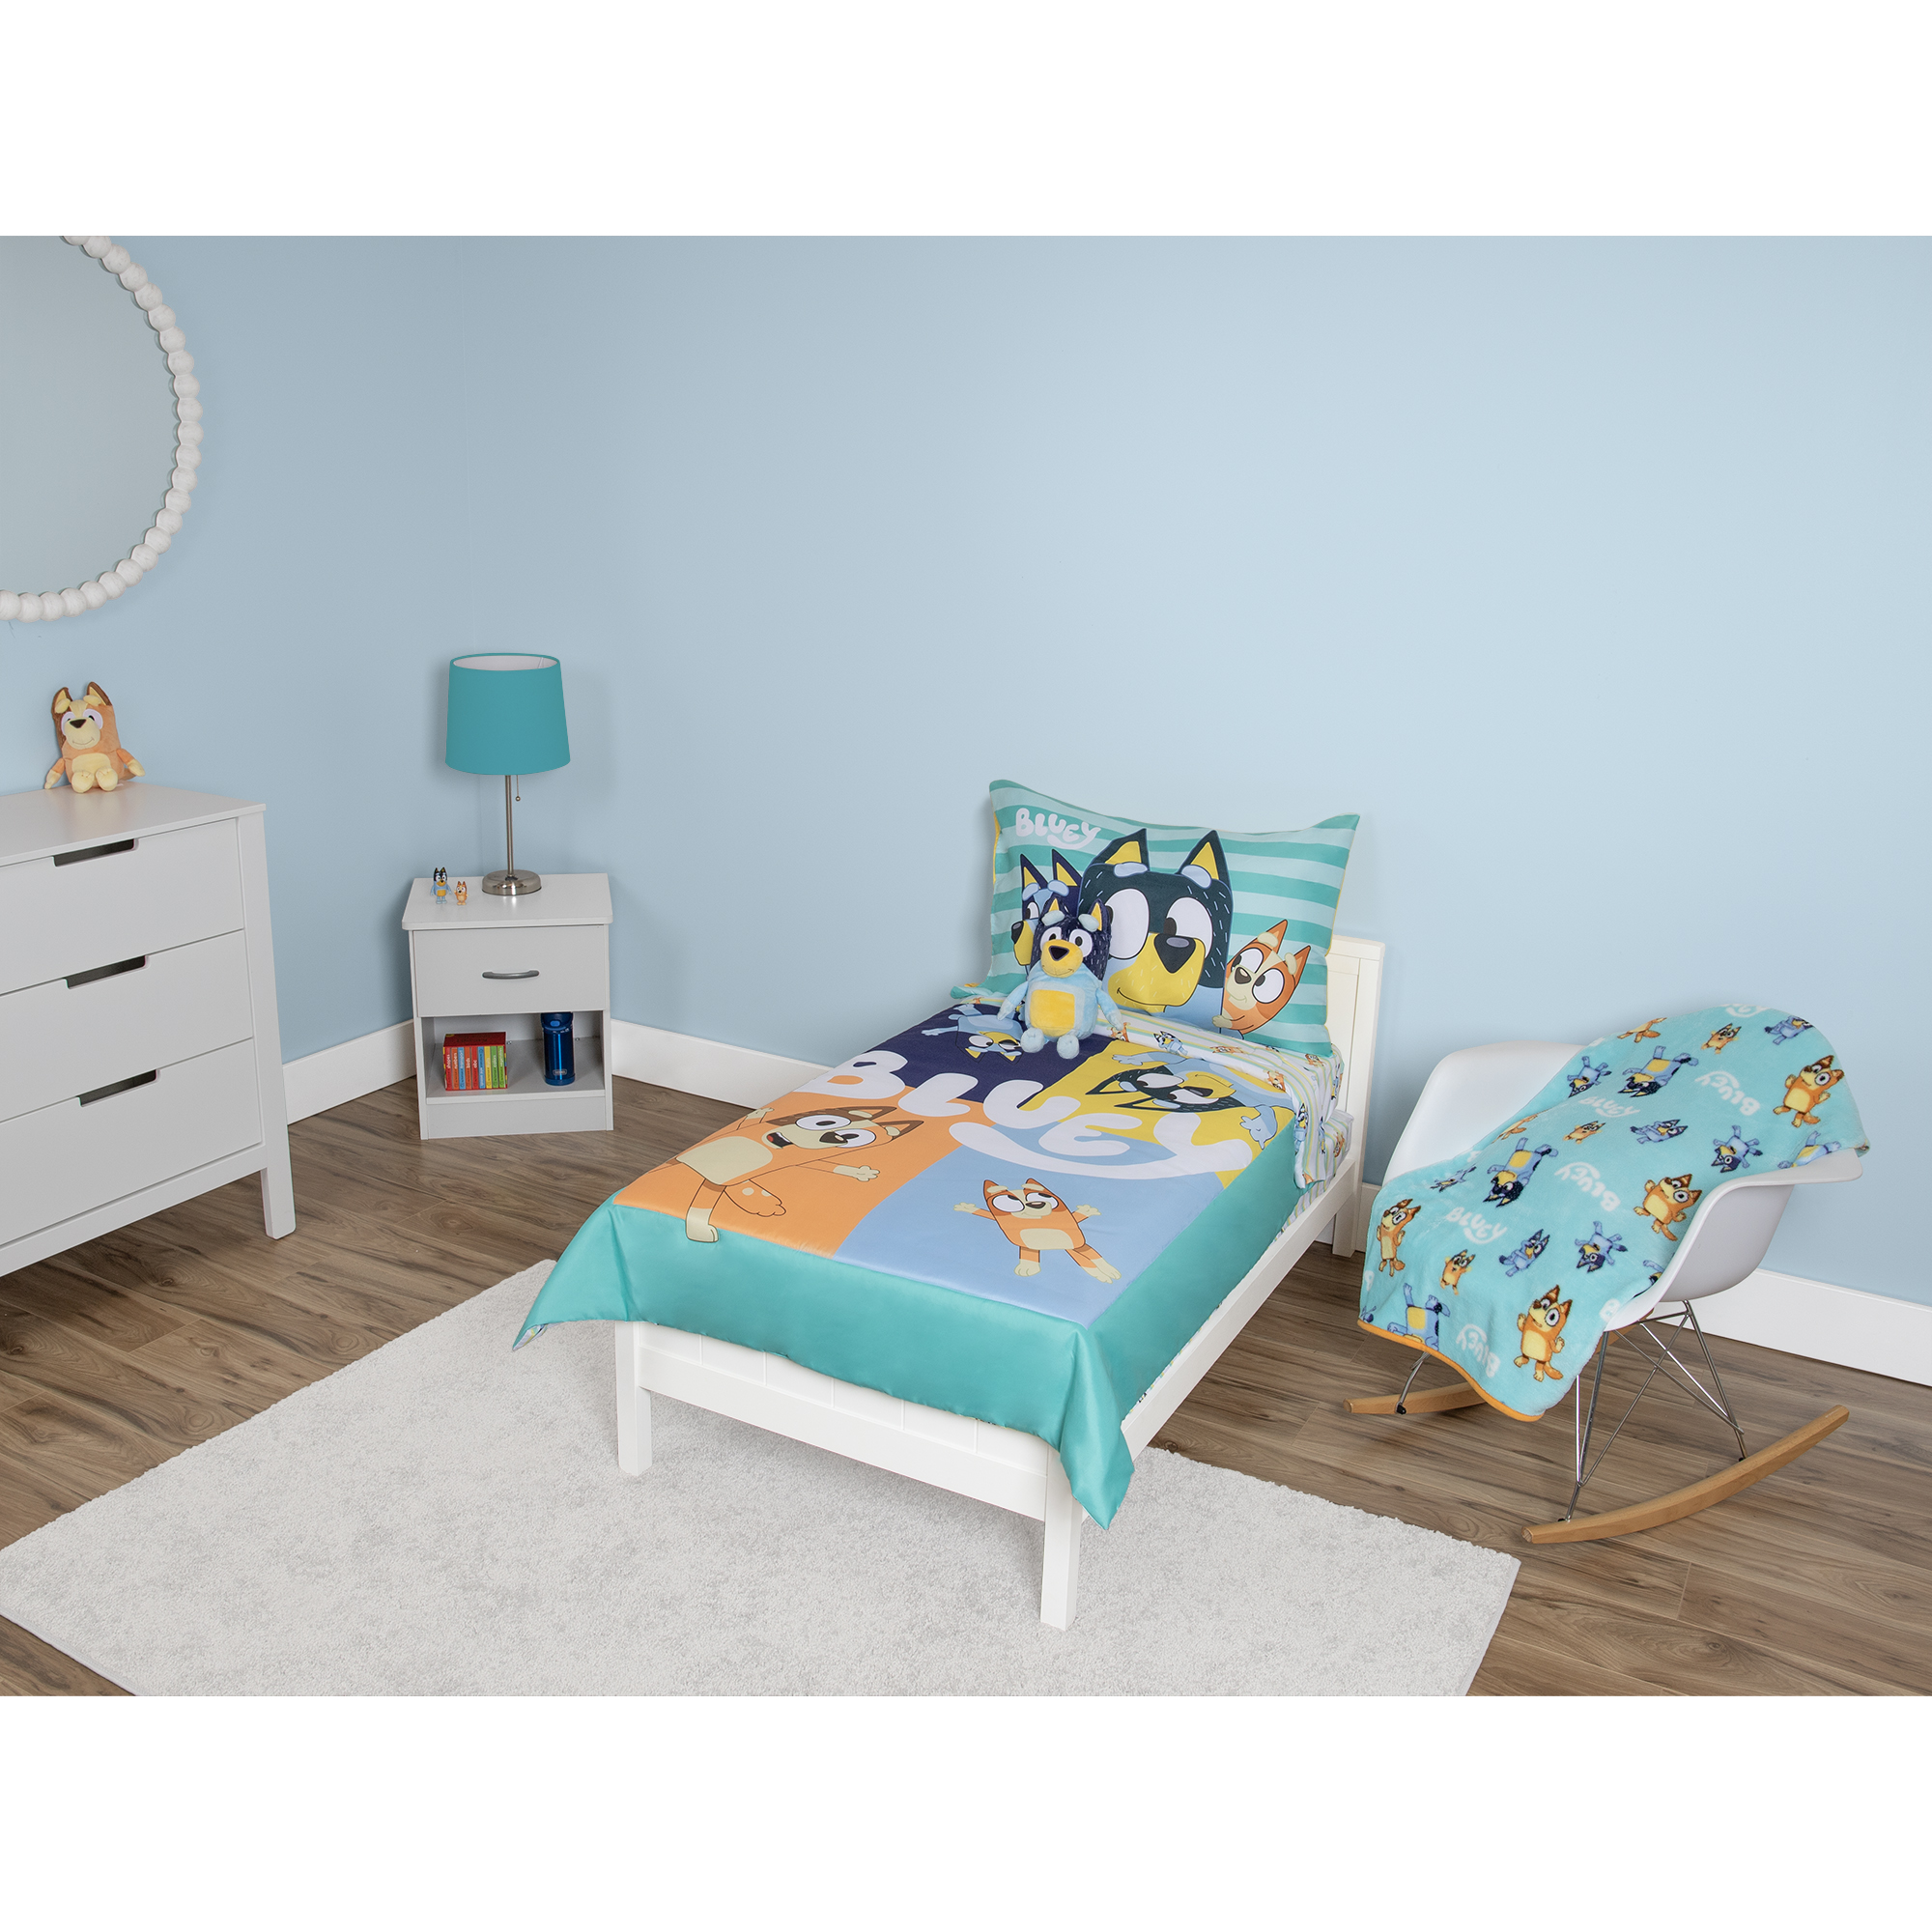 Bluey Toddler 5pc Bedding Set with Blanket - Blue - image 1 of 9